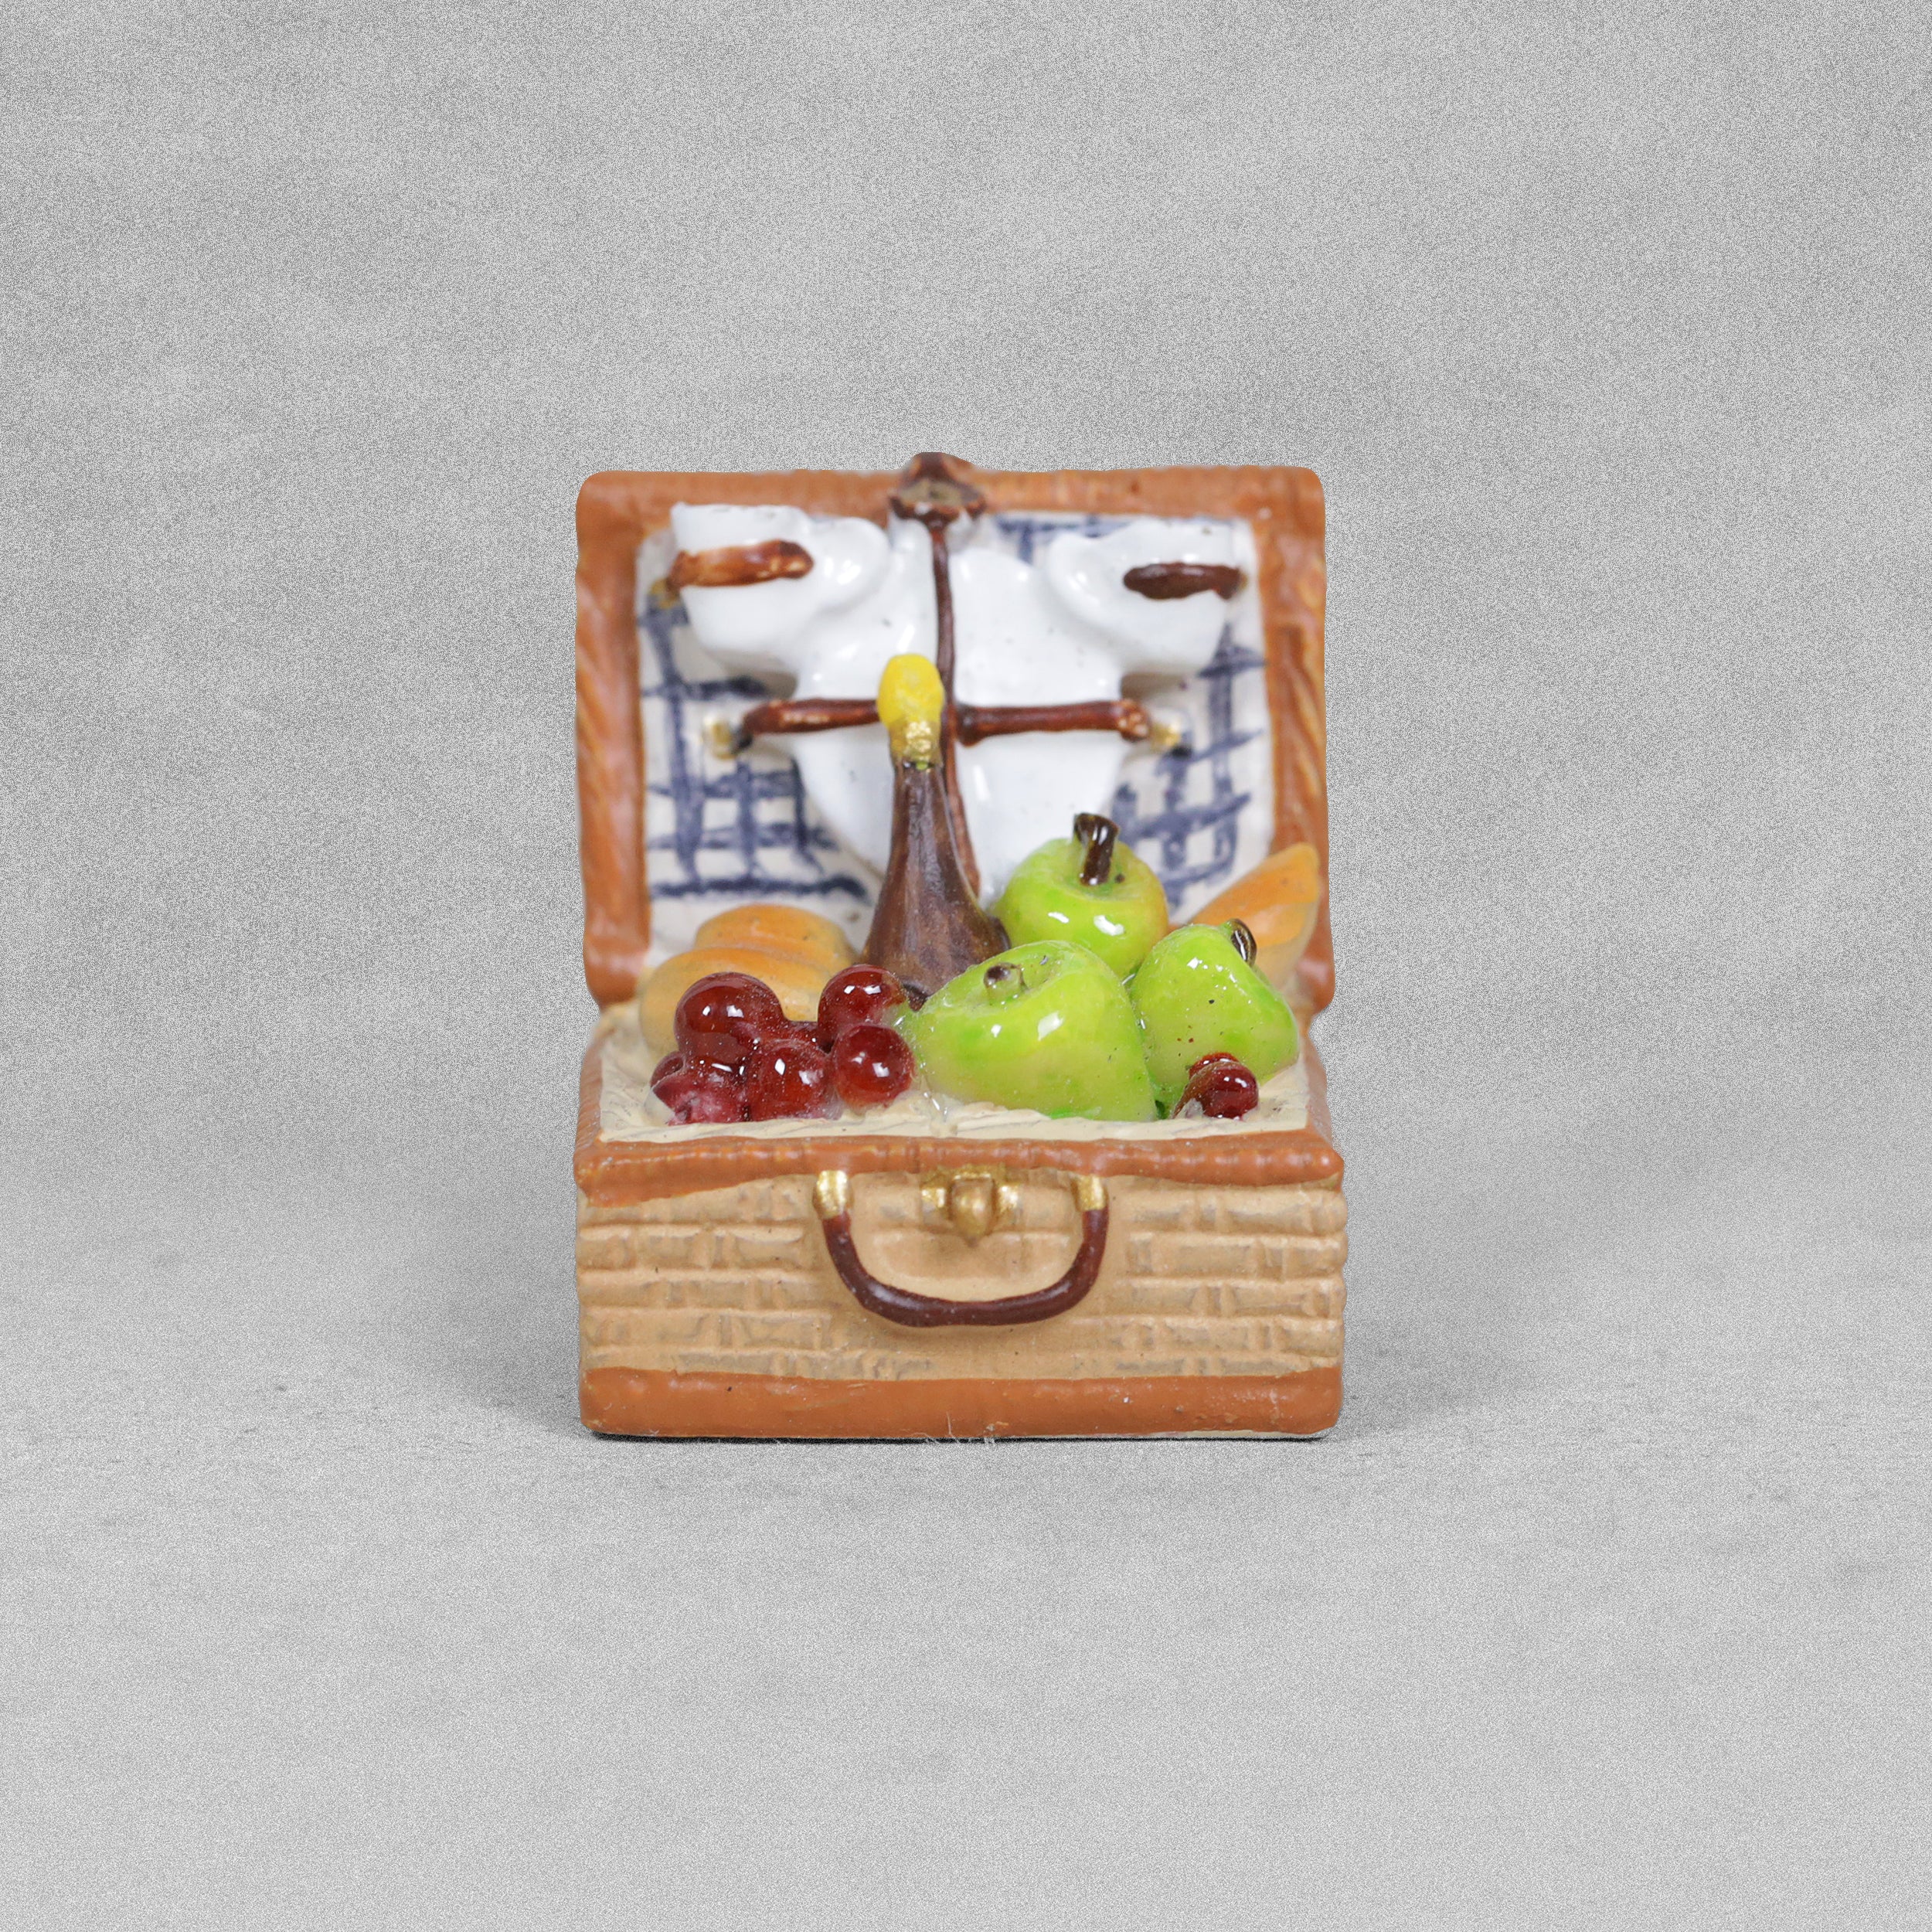 Vivid Arts Miniature World - Picnic Basket